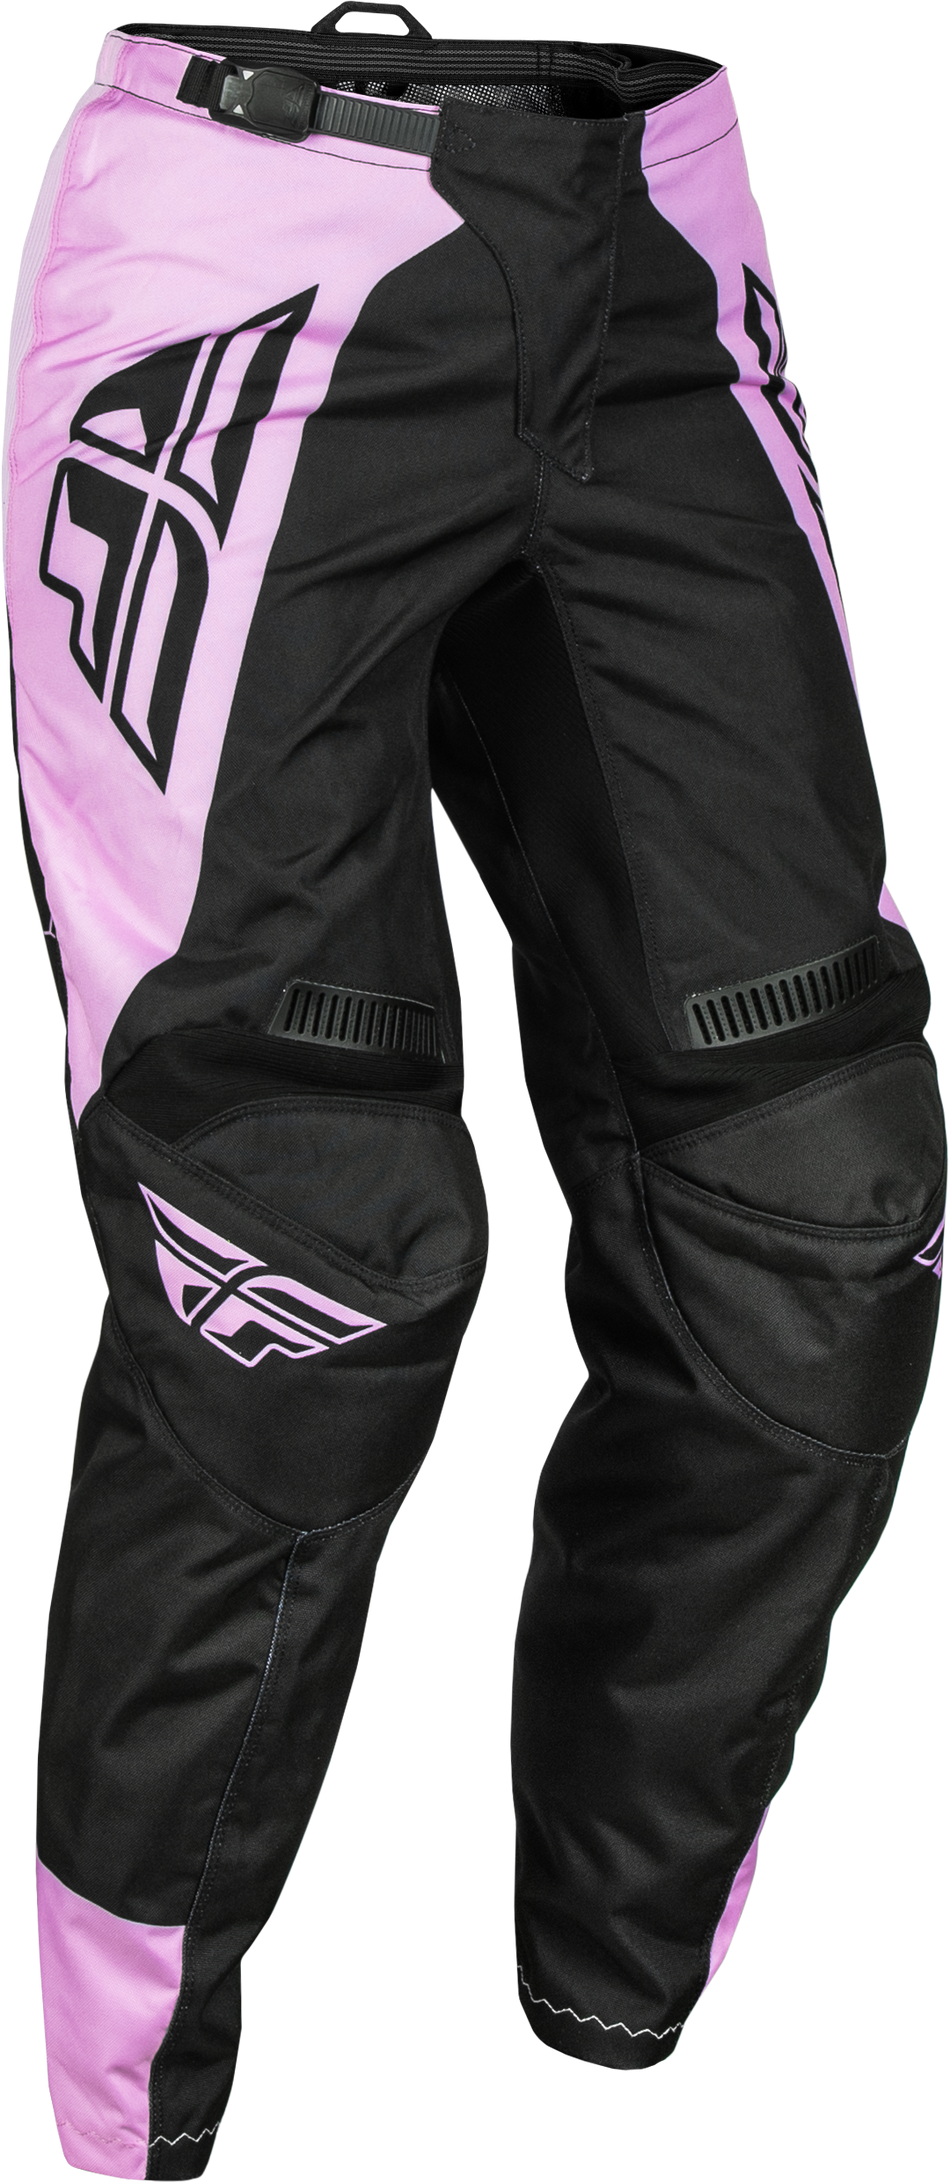 FLY RACING Women's F-16 Pants Black/Lavender Sz 13/14 377-83113